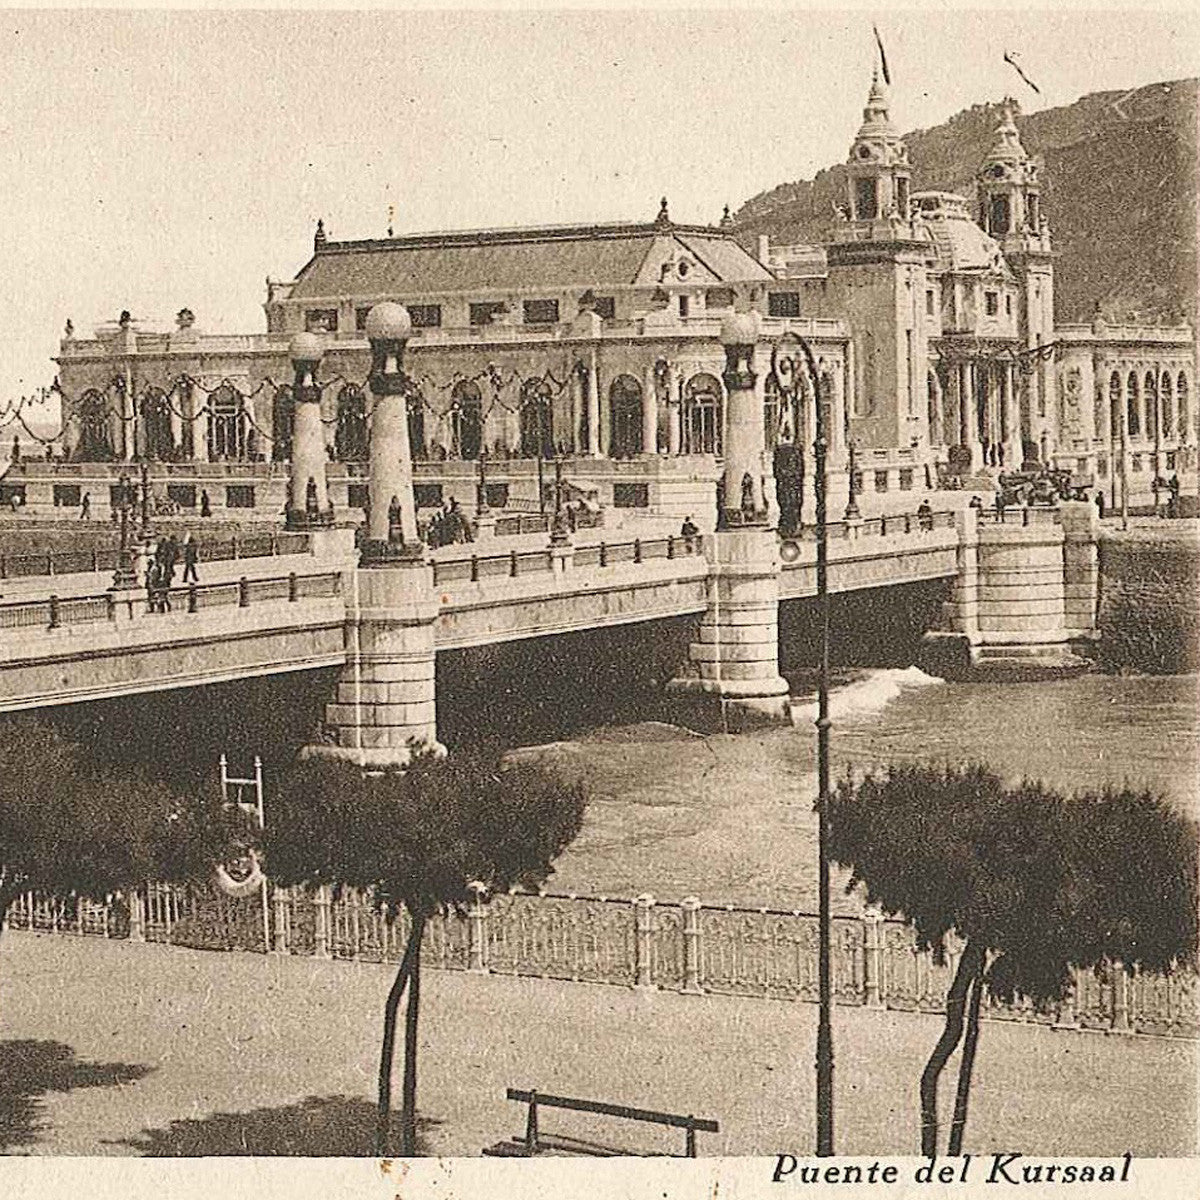 An Old Postcard from San Sebastian